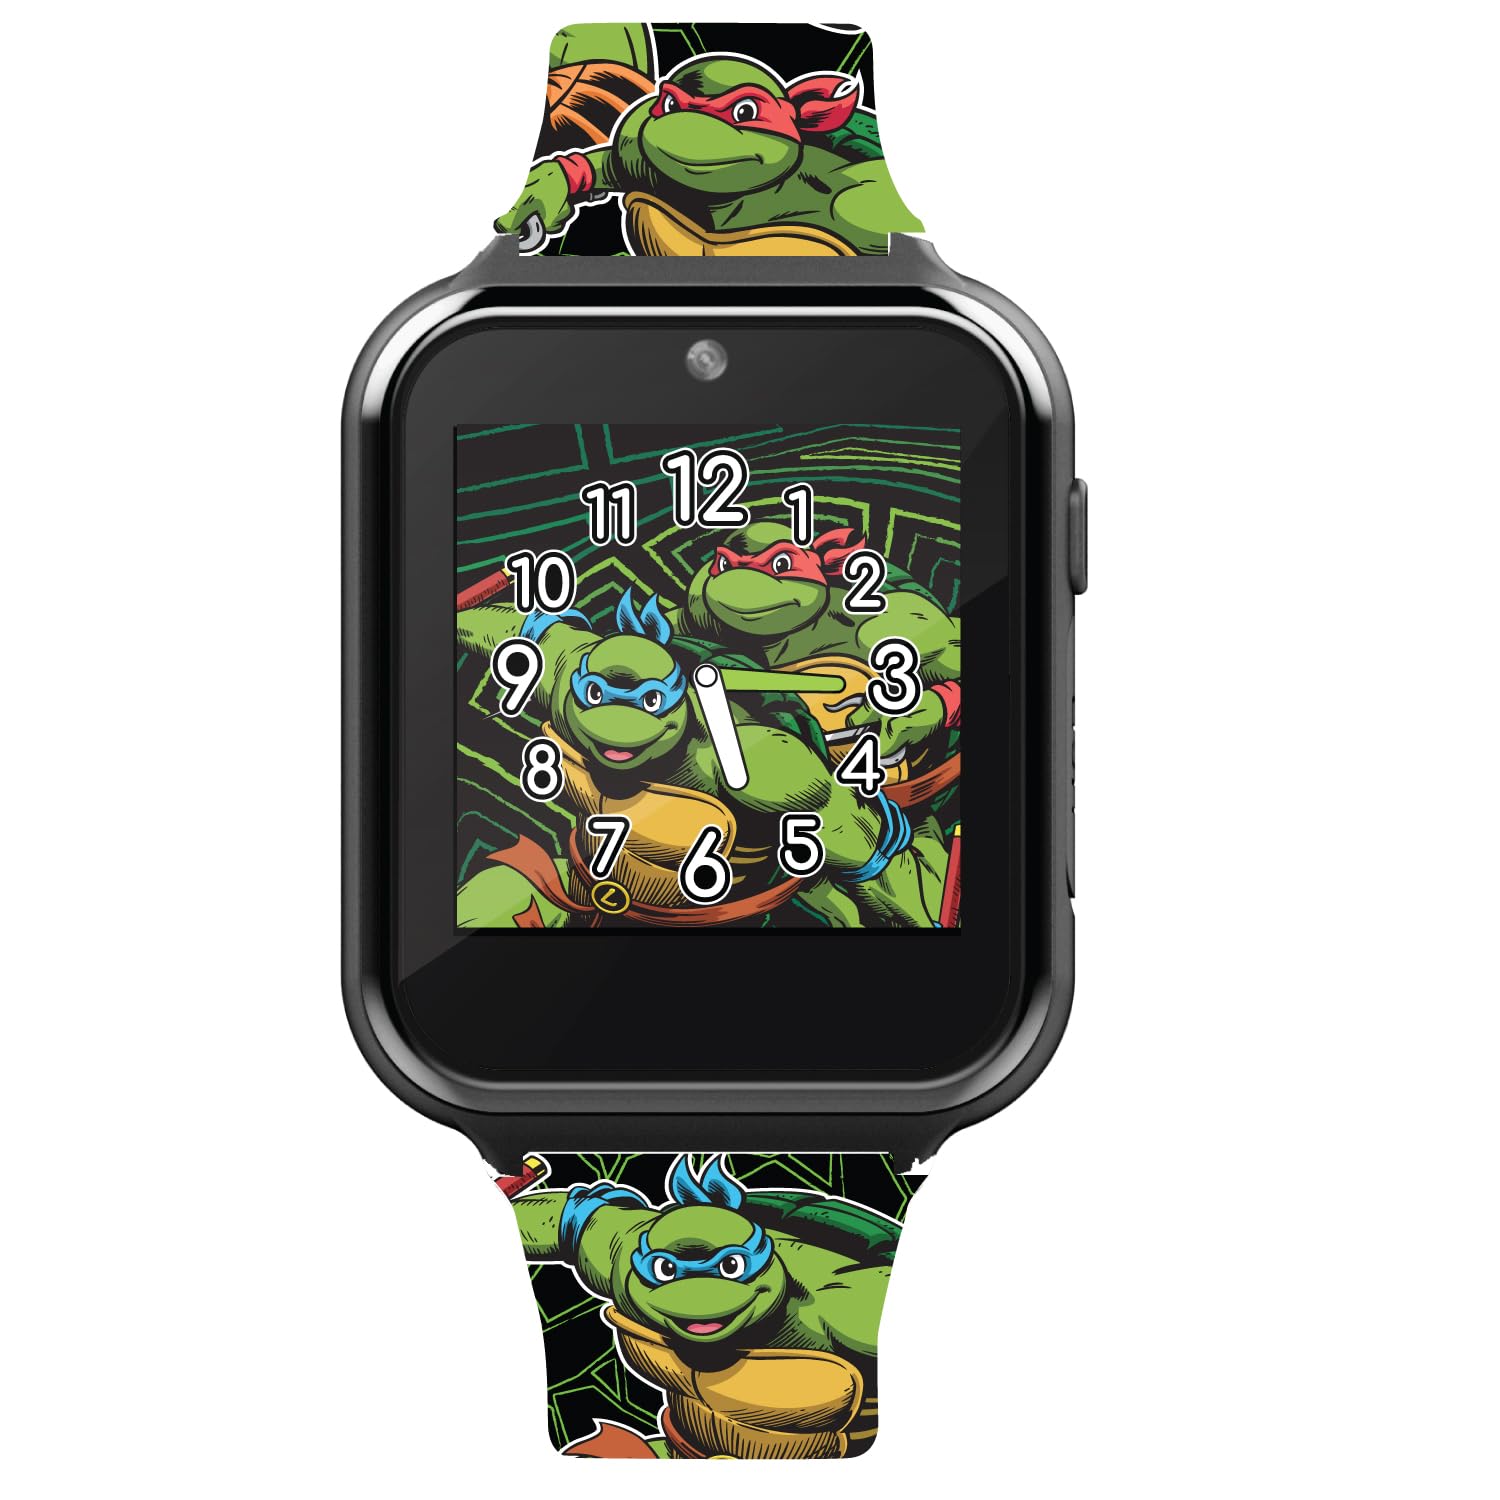 Accutime Teenage Mutant Ninja Turtles TMNT Nickelodeon Boys’ Green Educational Learning Touchscreen Smart Watch Toy - Raphael Leonardo Michelangelo Donatello (Model: TMR4150AZ)